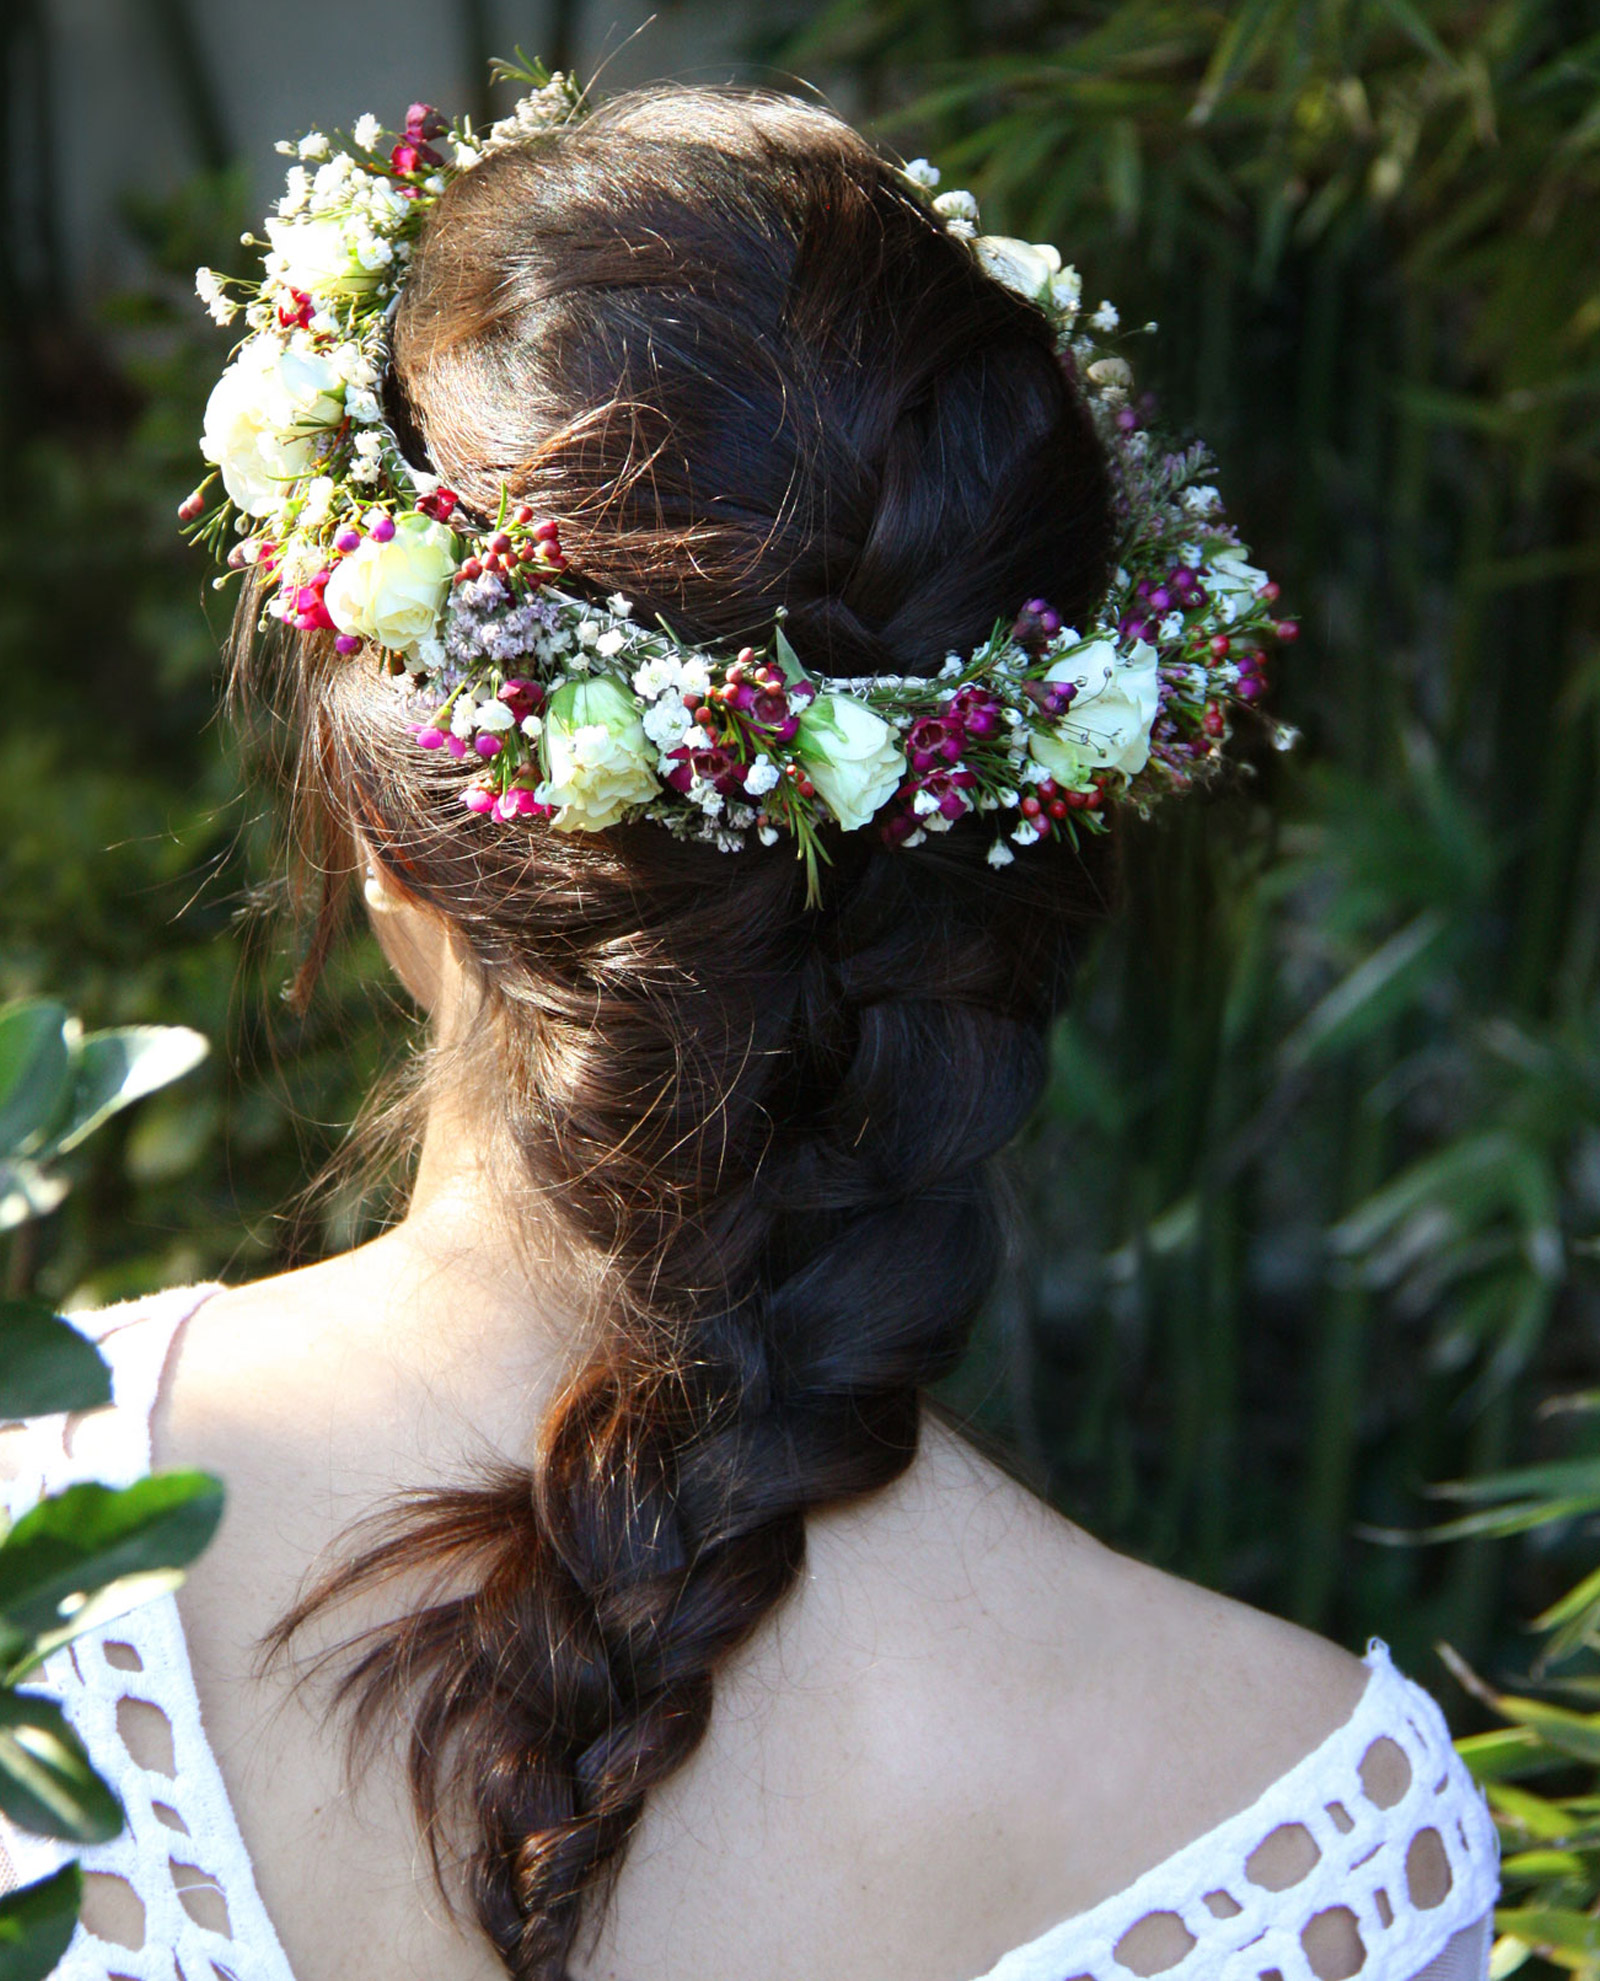 Corona de novia con rosas, eucalipto y flor de cera